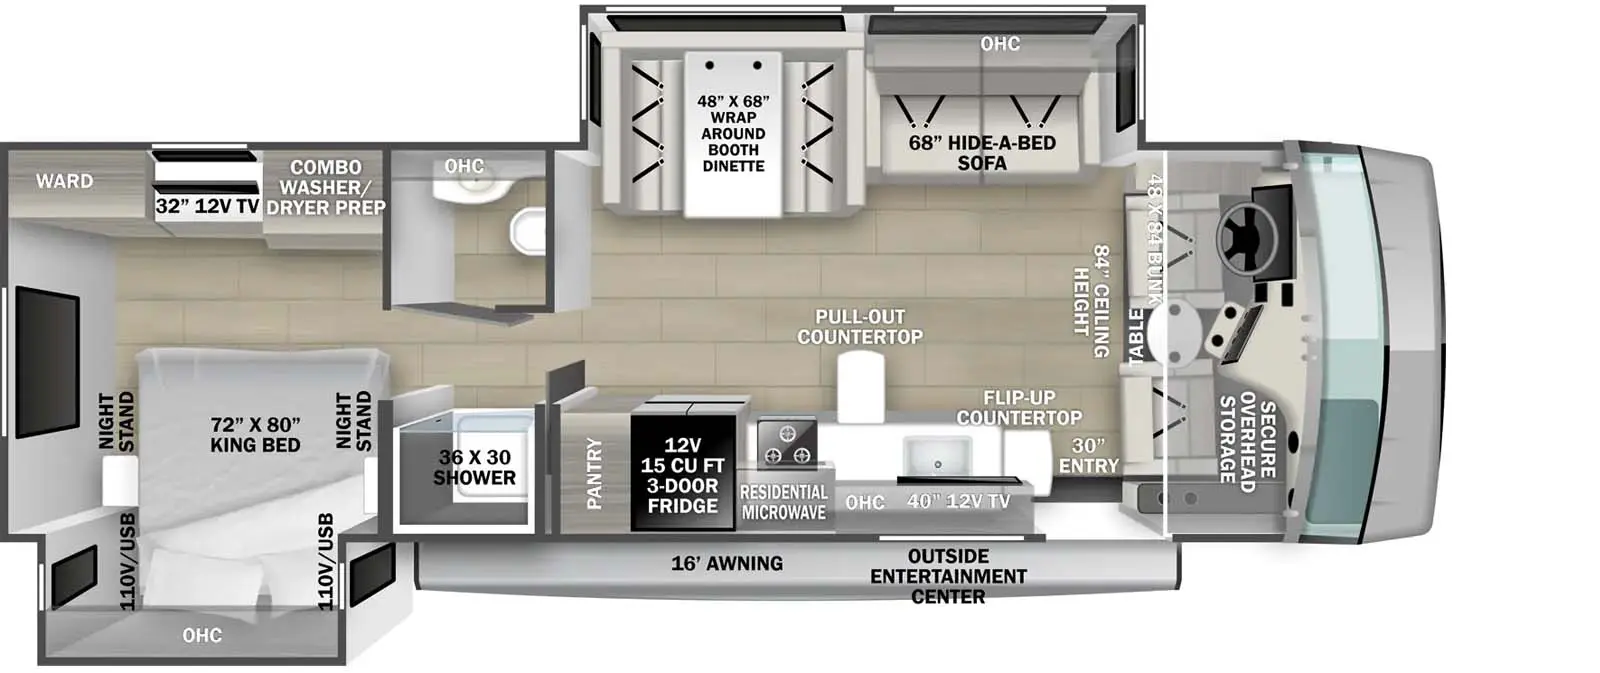 30DS Floorplan Image